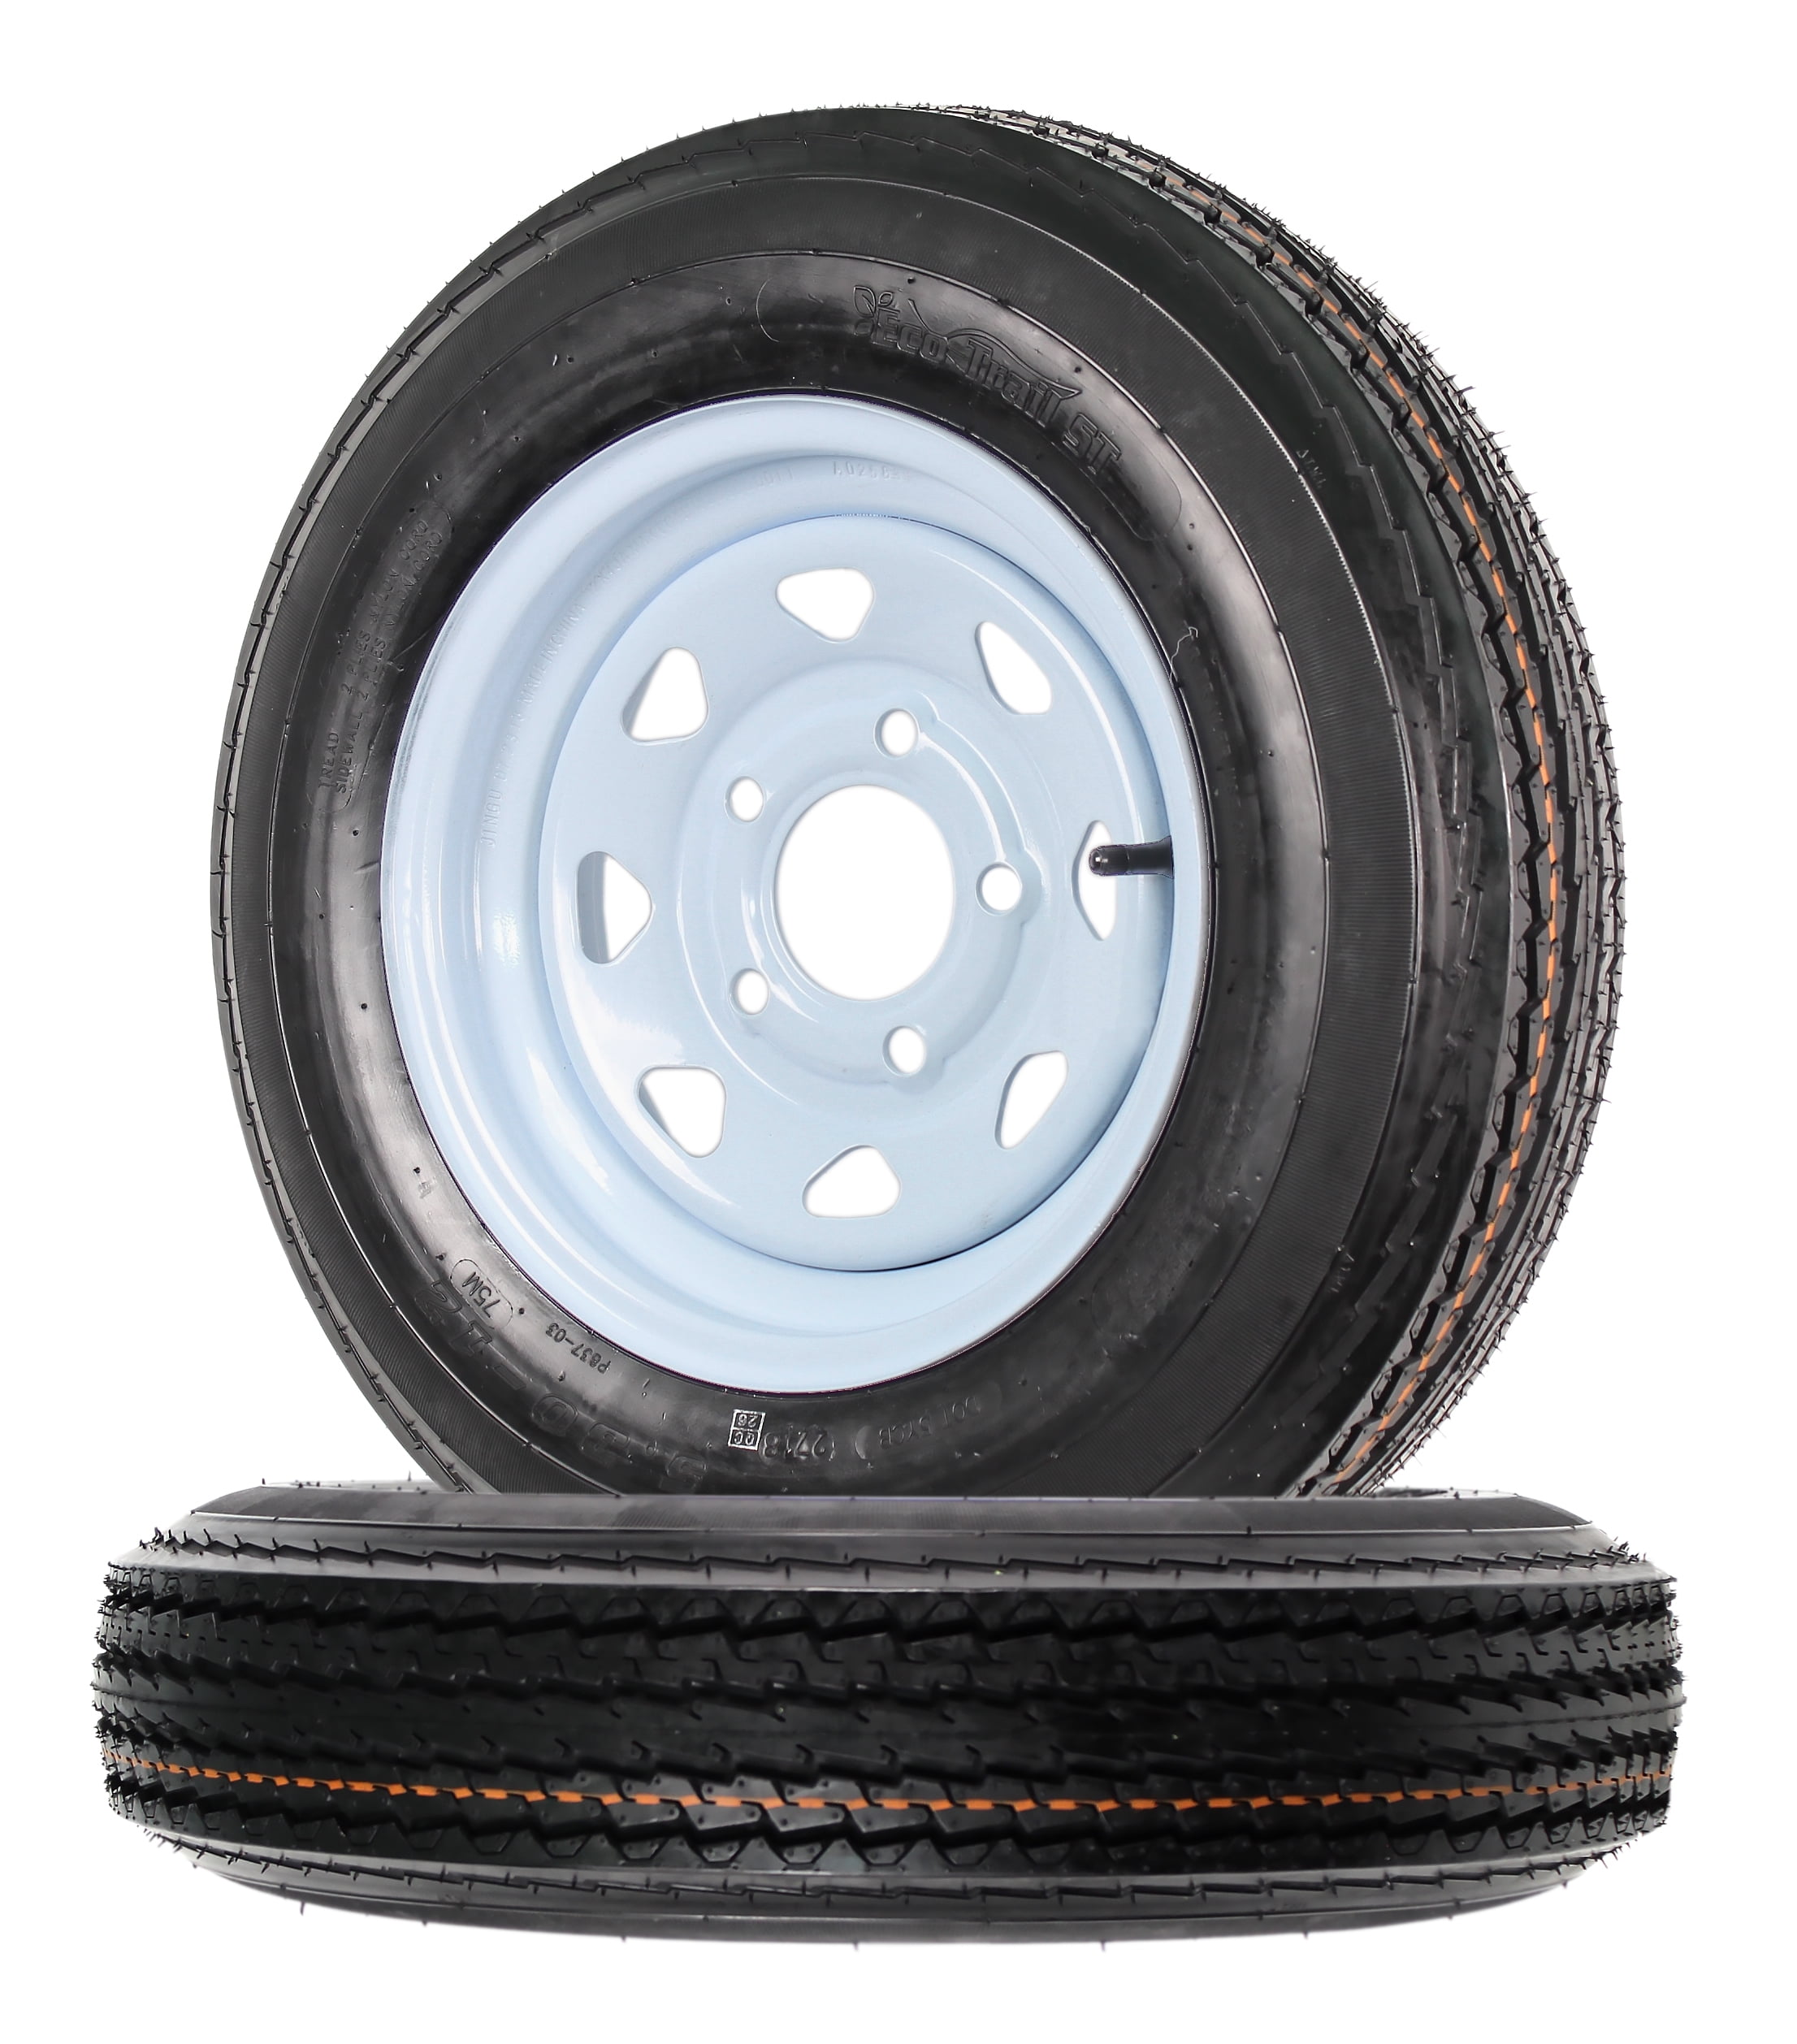 Mounted Tire Rack Trailer Shop Garage Storage Wheels Parts Accessories Race Car 